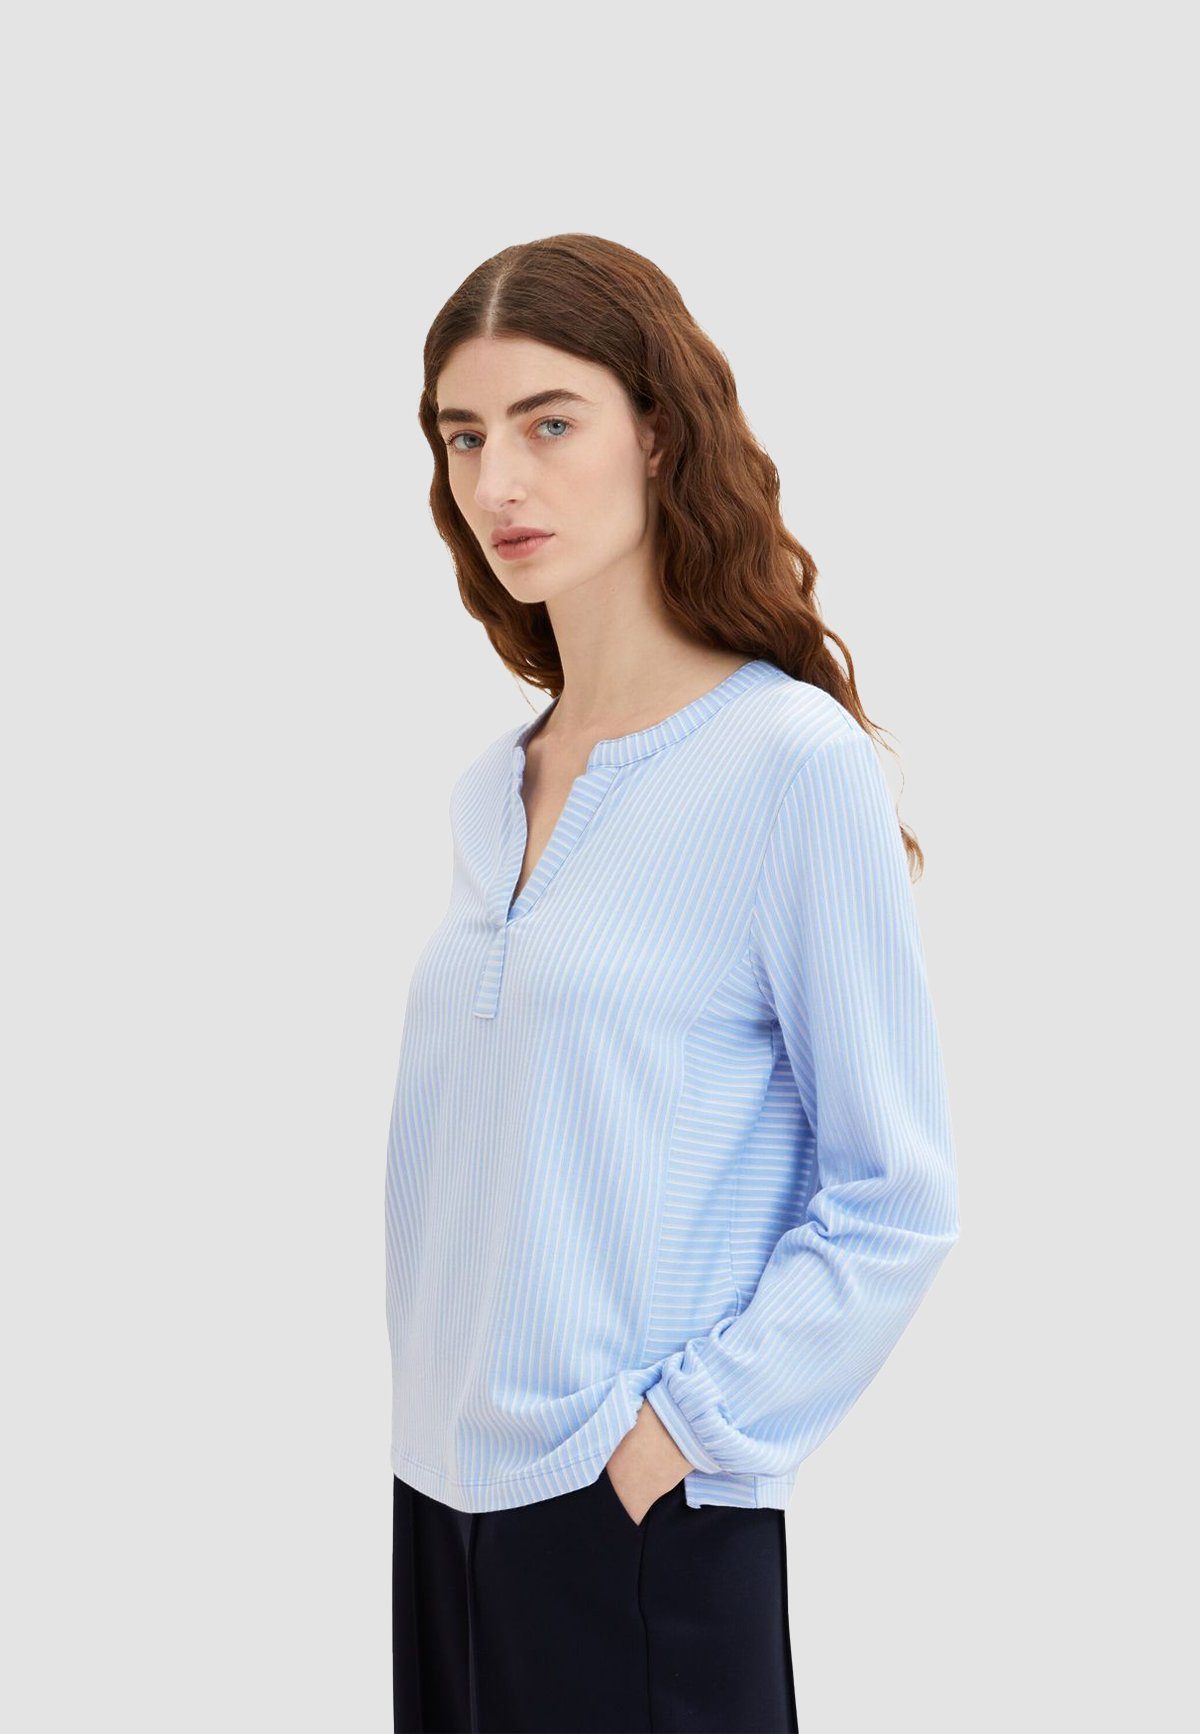 TOM TAILOR Blusenshirt Gestreifte Langarm Bluse V-Ausschnitt Business Tunika Top Shirt 5310 in Blau dreamy blue whi